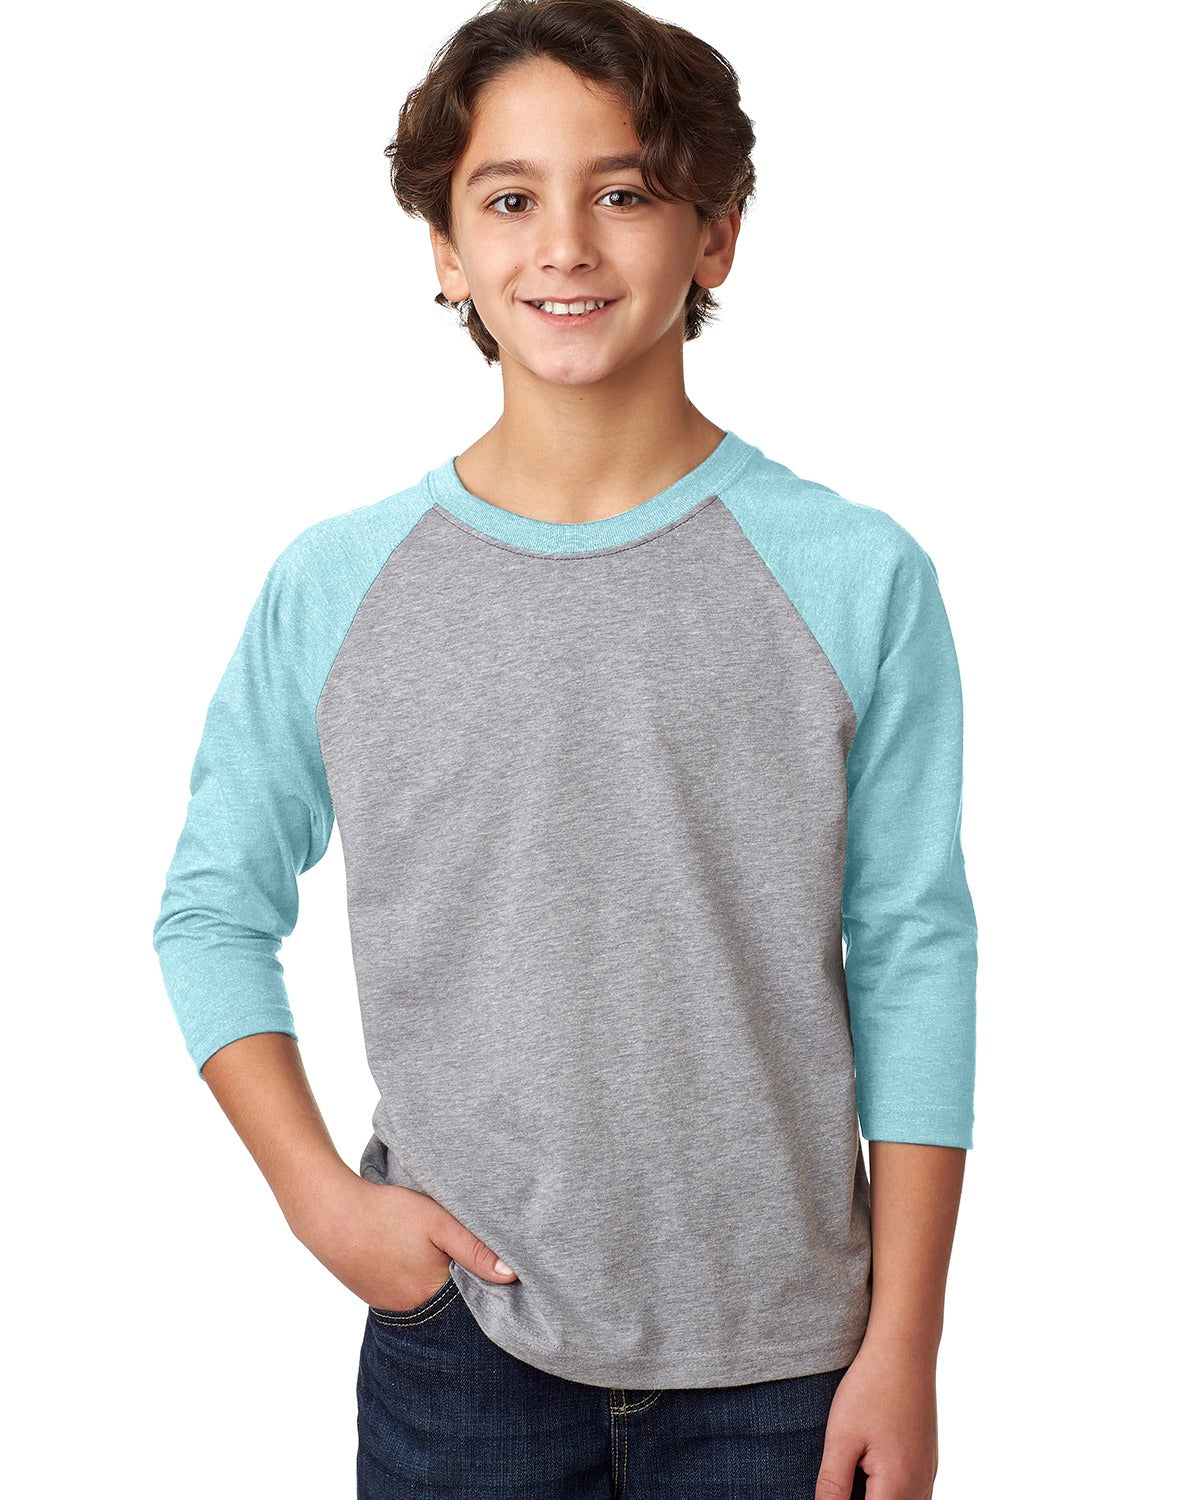 child model wearing next level youth 3/4 sleeve raglan tee in ice blue dark heather grey